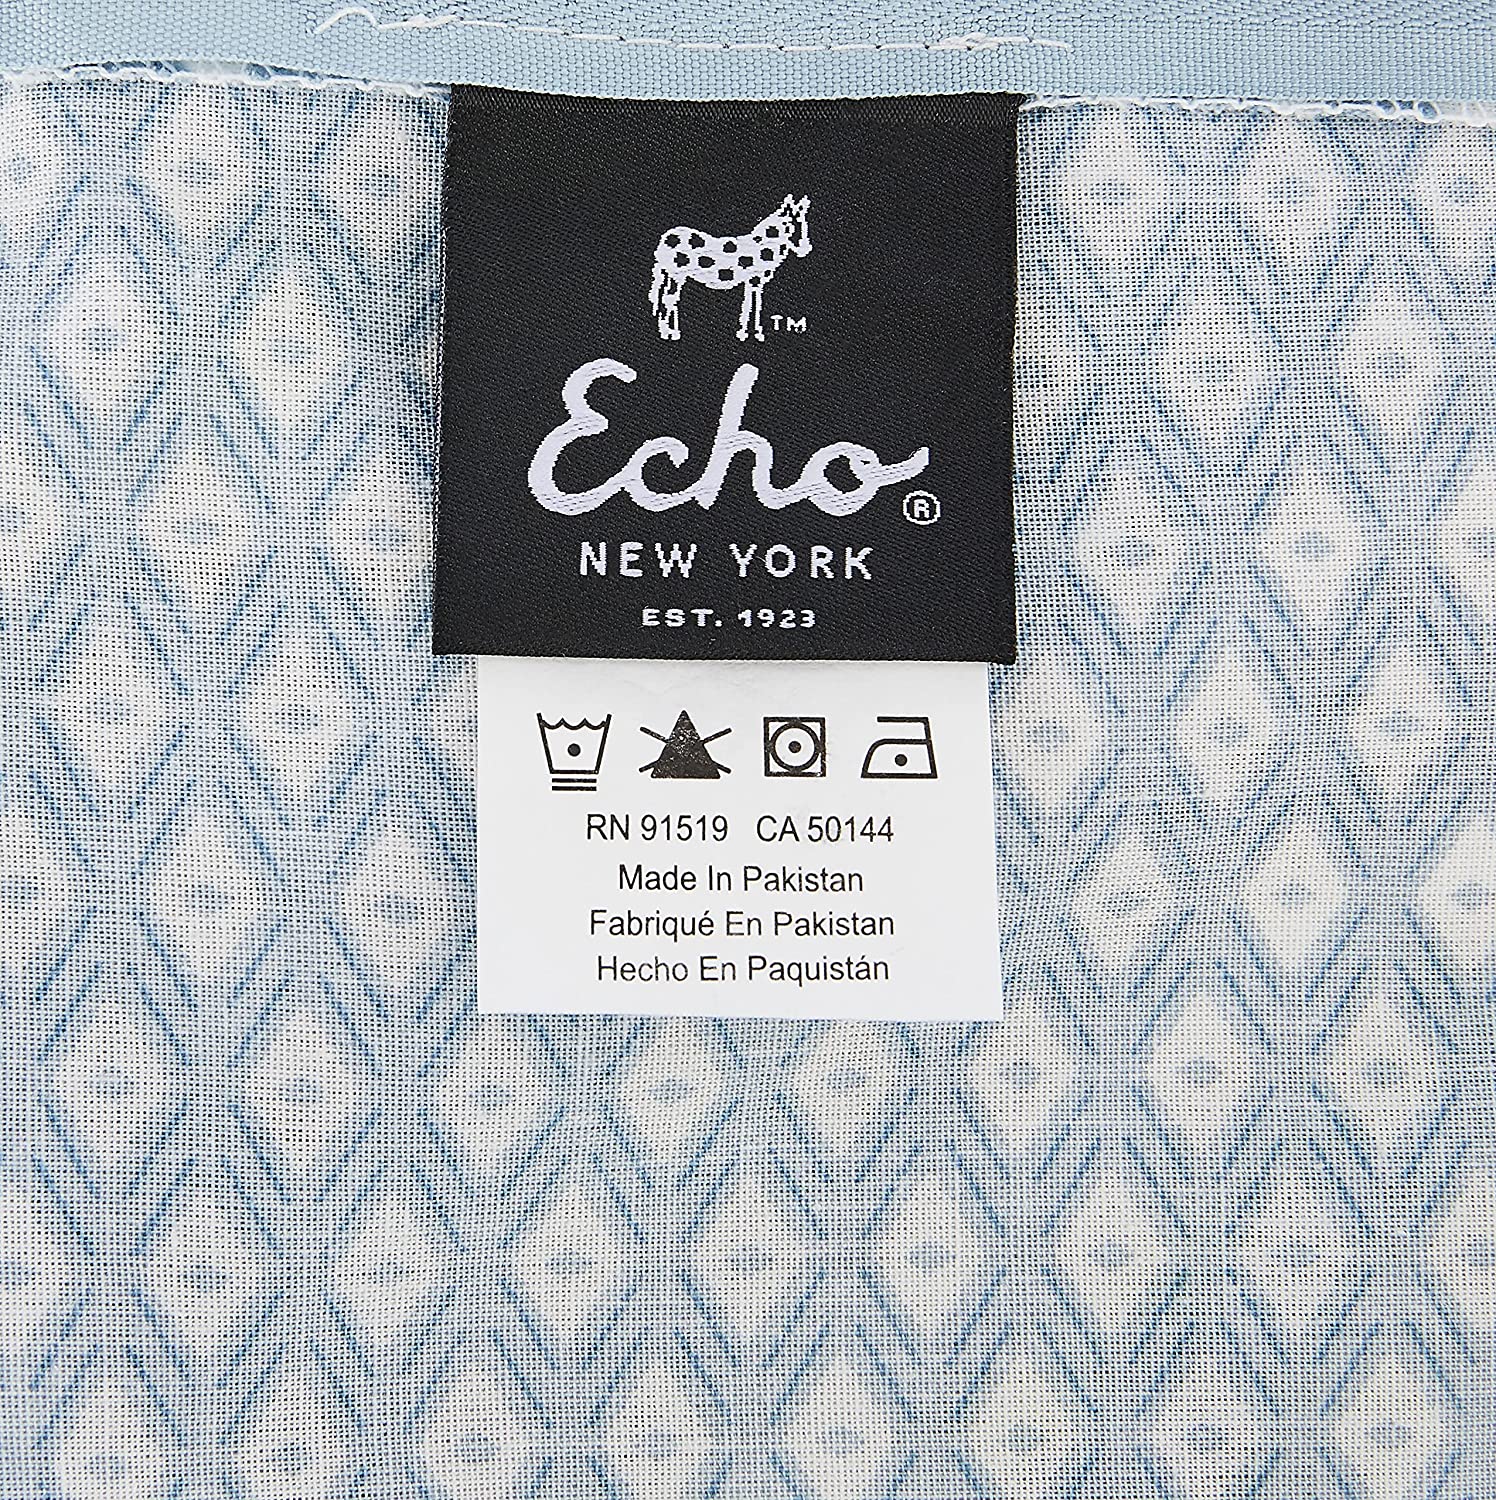 Echo Design Sardinia Duvet Cover King Size - Teal Green , Paisley Duvet Cover Set ‚Äì 3 Piece ‚Äì 100% Cotton Light Weight Bed Comforter Covers